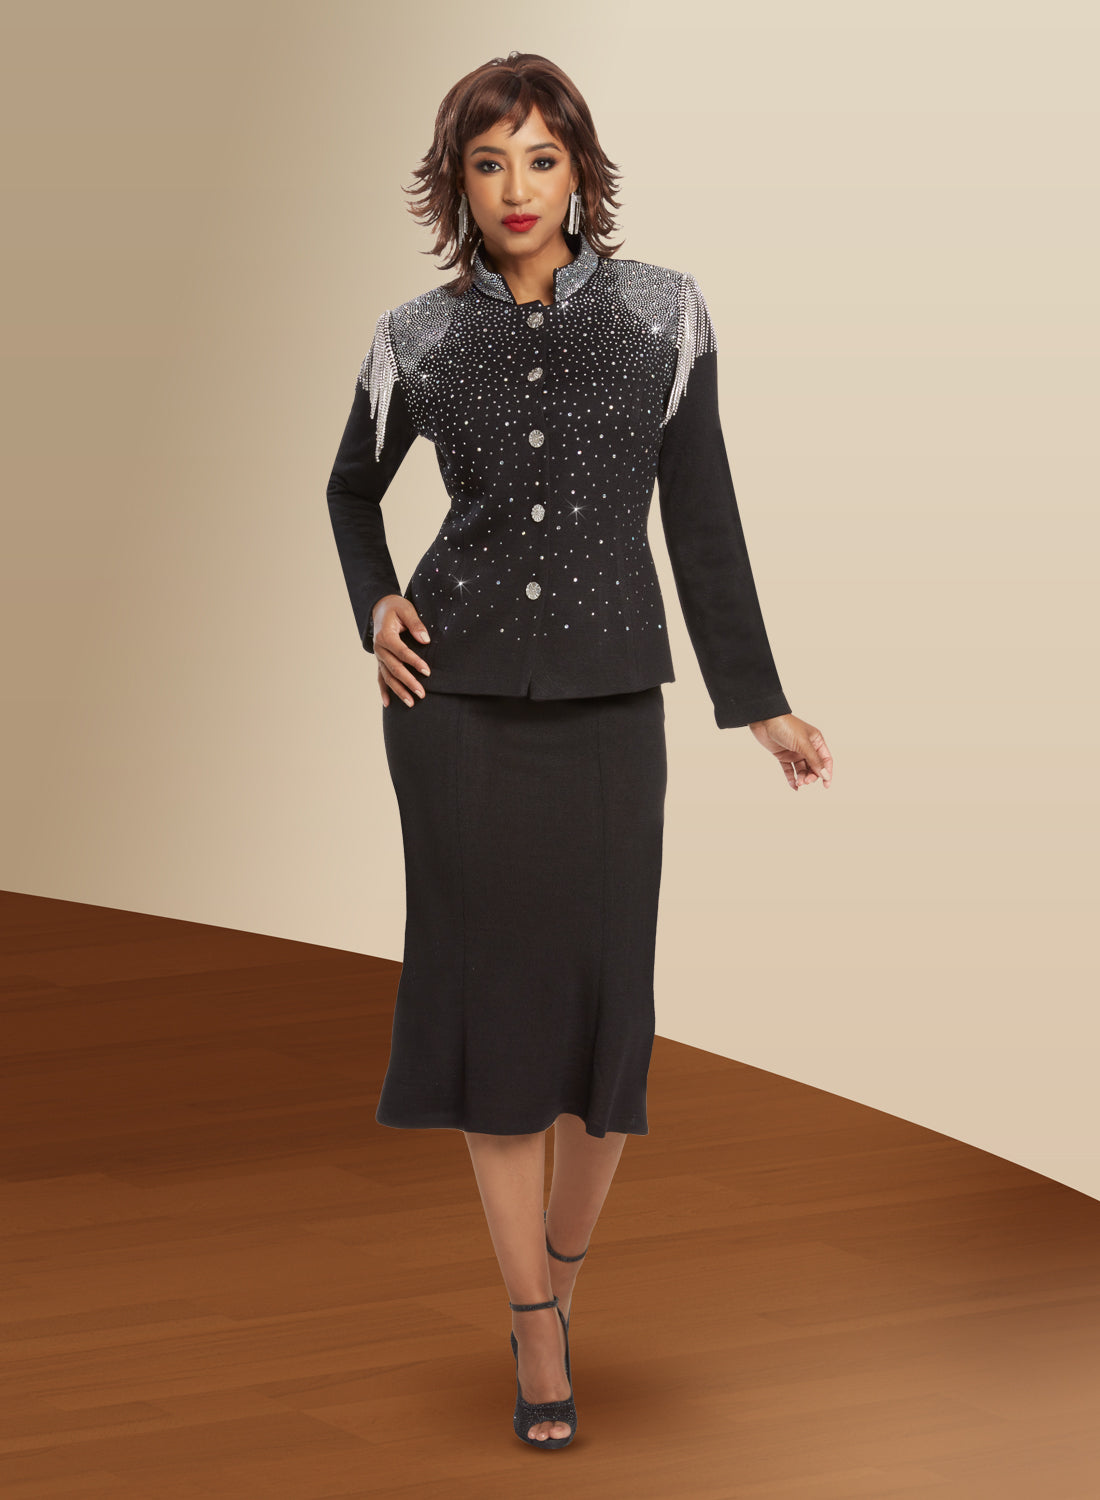 Donna Vinci - 13377 - Black - Knit 2pc Skirt Suit with Rhinestone Embellishments and Fringe Trim